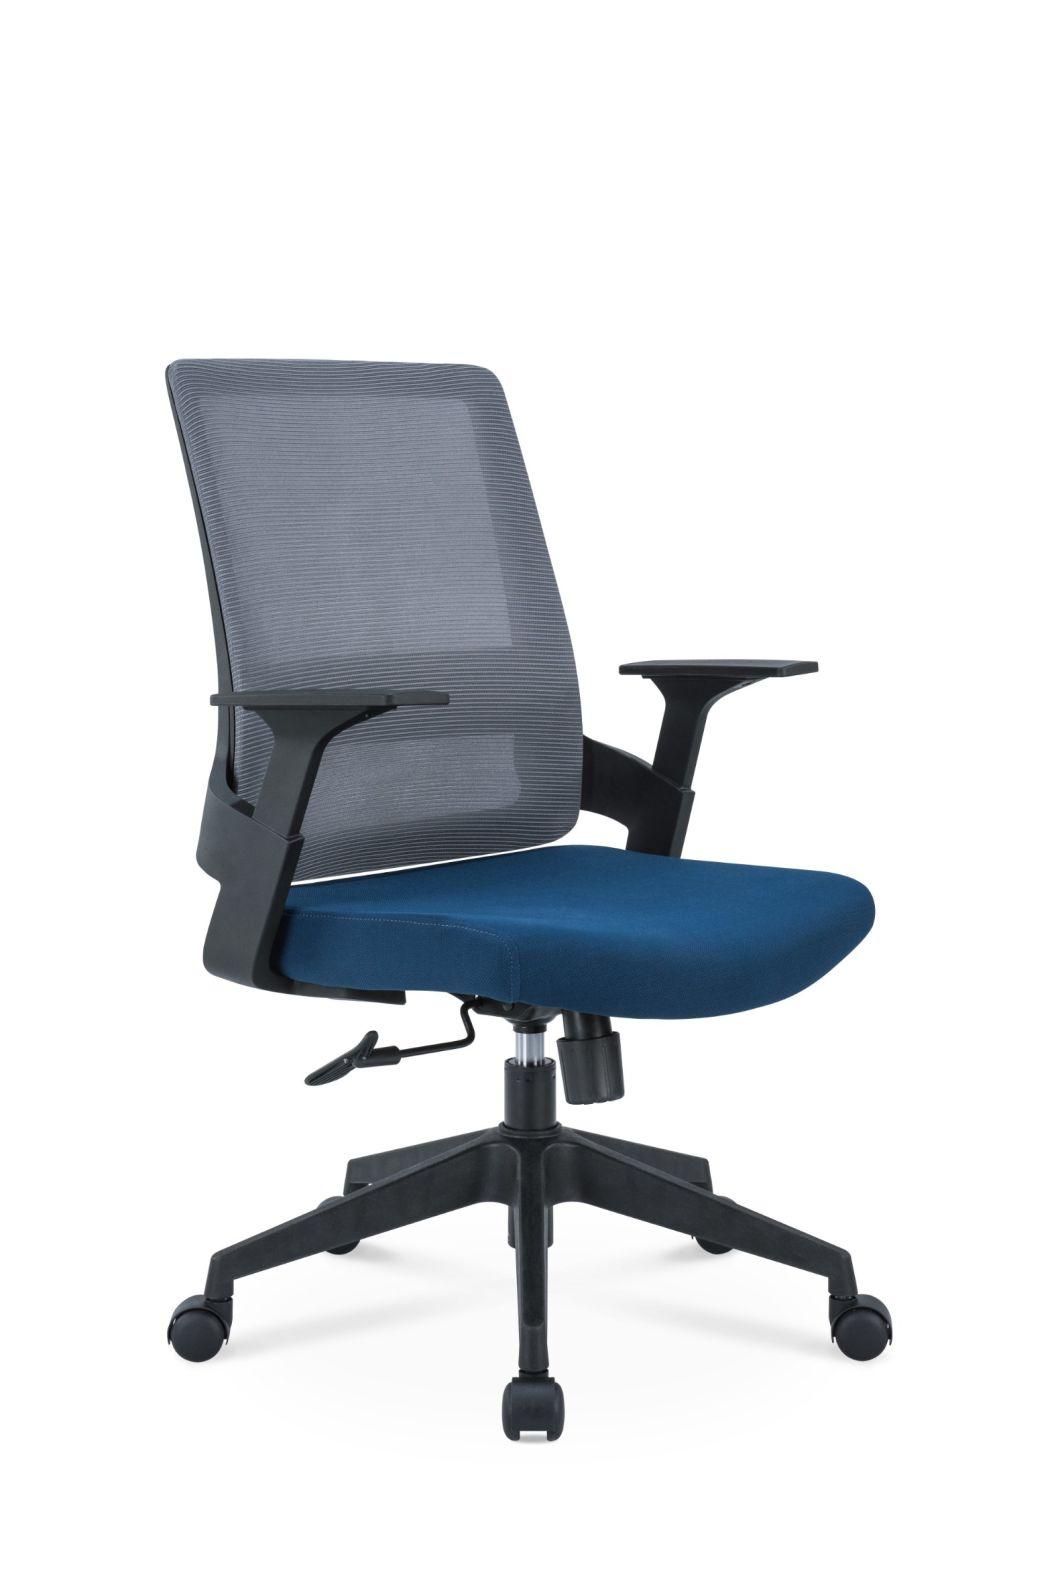 High Quality European Standard En1335 BIFMA Medium Back Staff Modern Fabric Mesh Swivel Office Chair